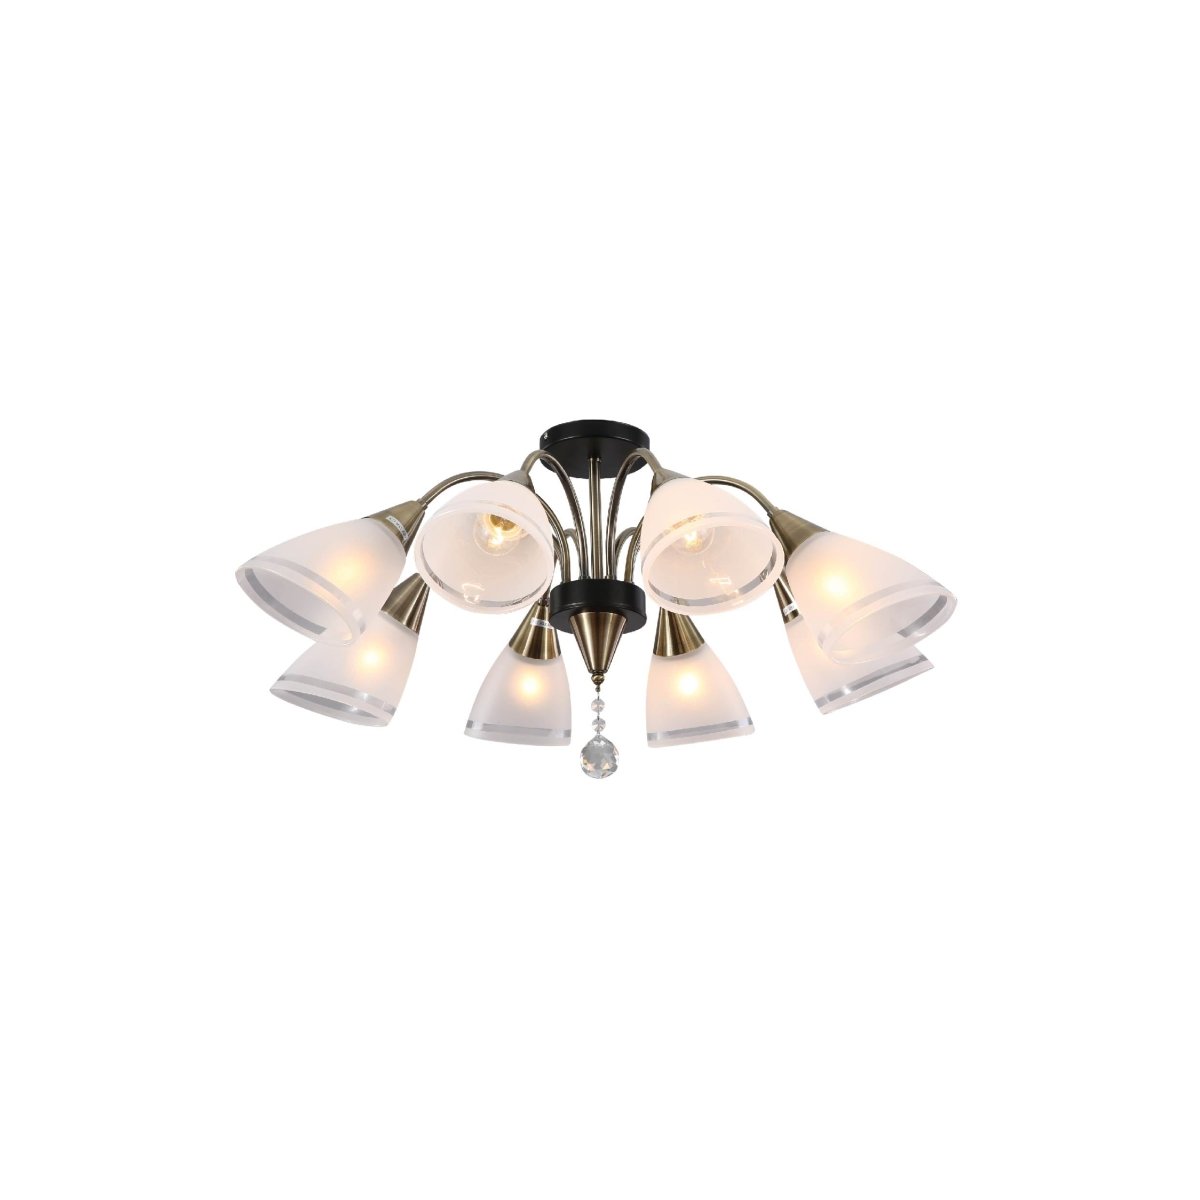 Main image of Petal Snowdrop Cone Glass Antique Brass Semi Flush Ceiling Light E27 | TEKLED 159-17730